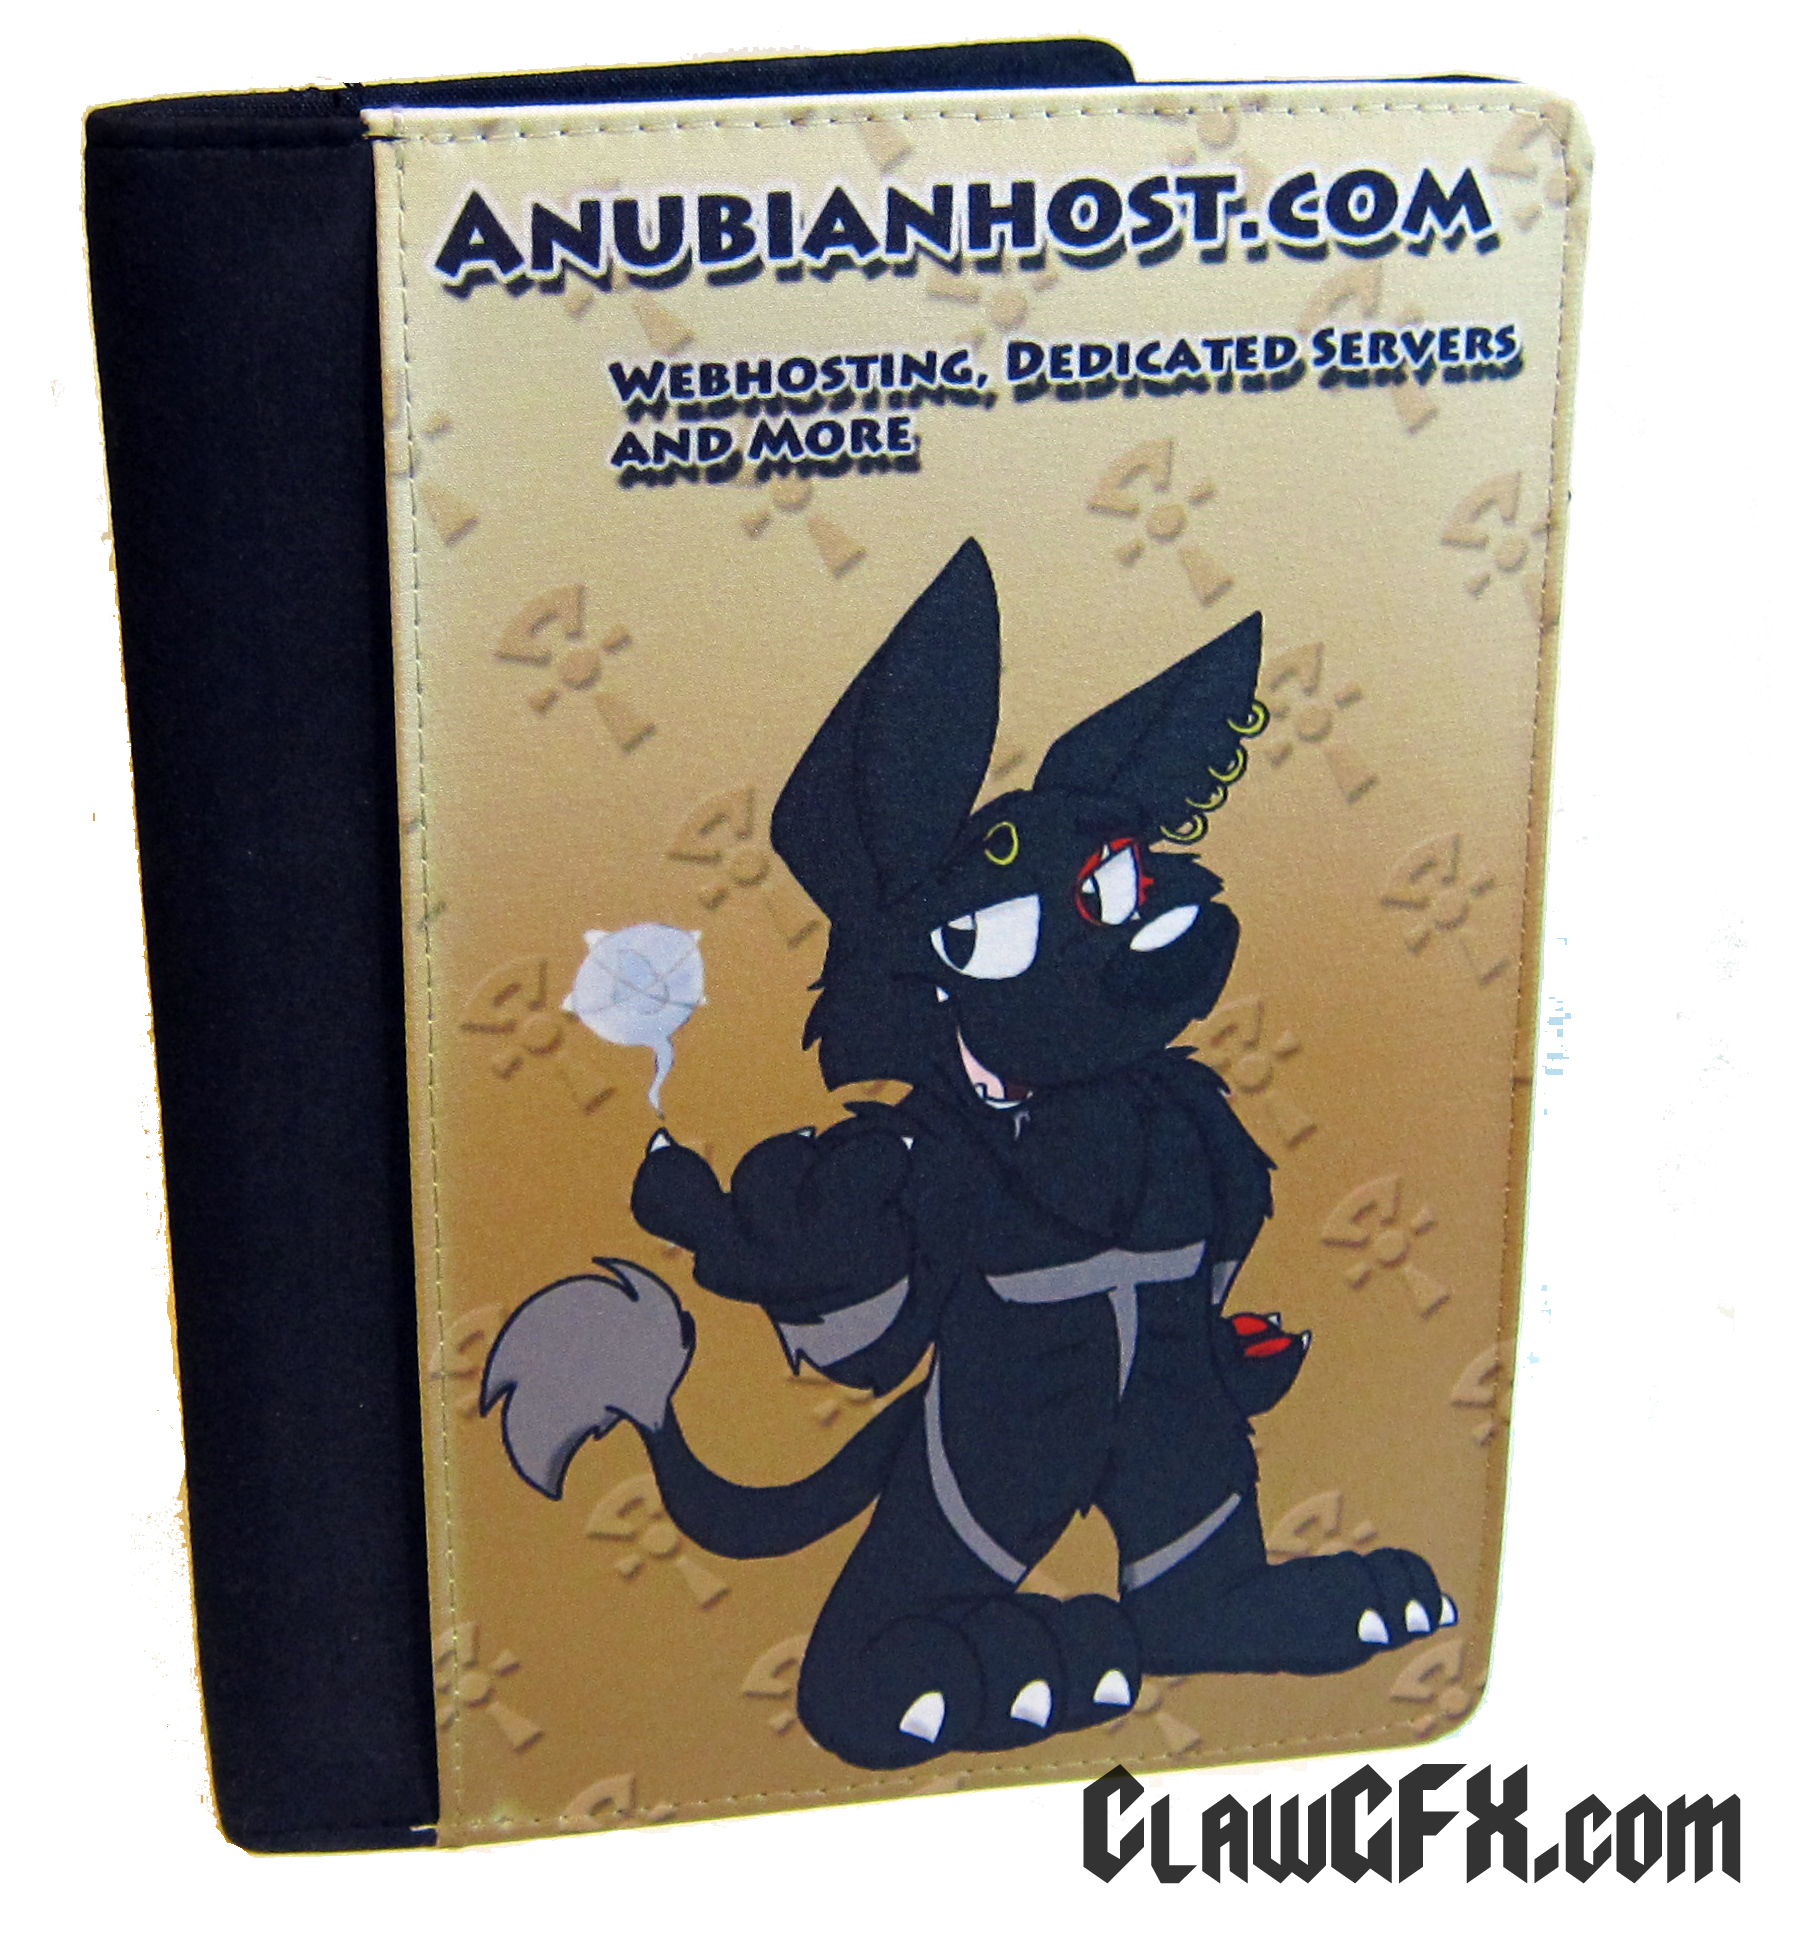 Anubianhost.com Medium Notebook made with sublimation printing